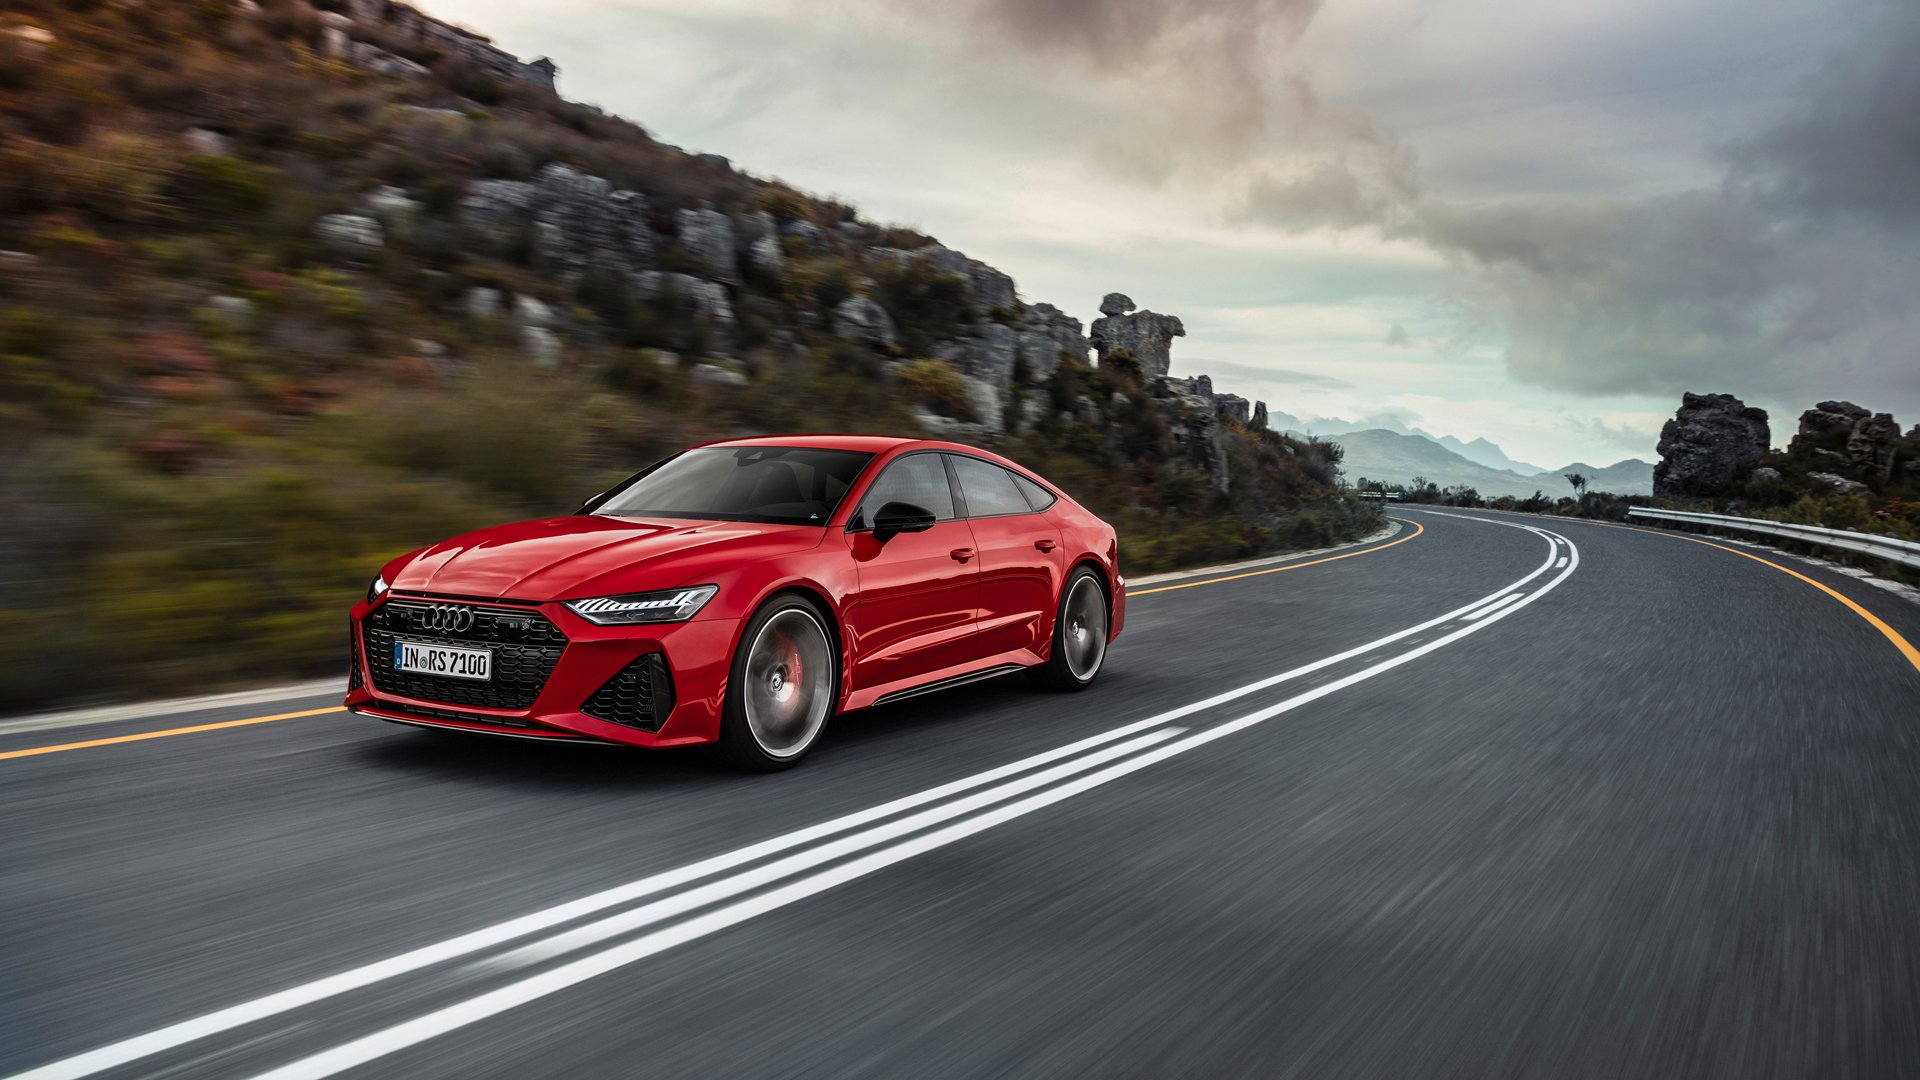 Audi RS 7 Sportback Photo Gallery